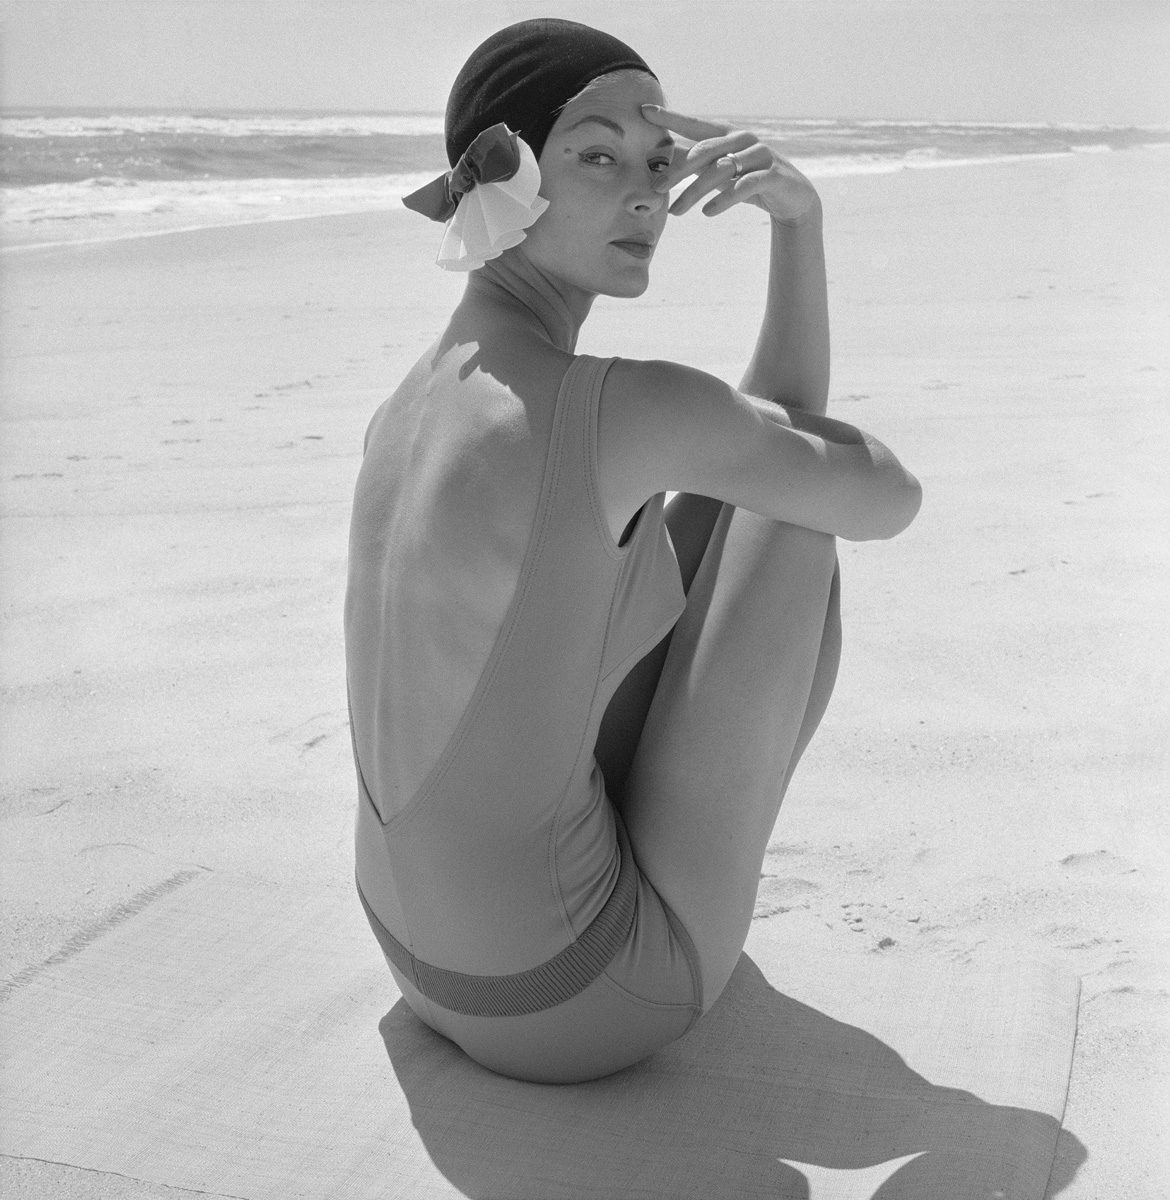 Jean Patchett, West Hampton Beach, New York
1954 
By William Helburn